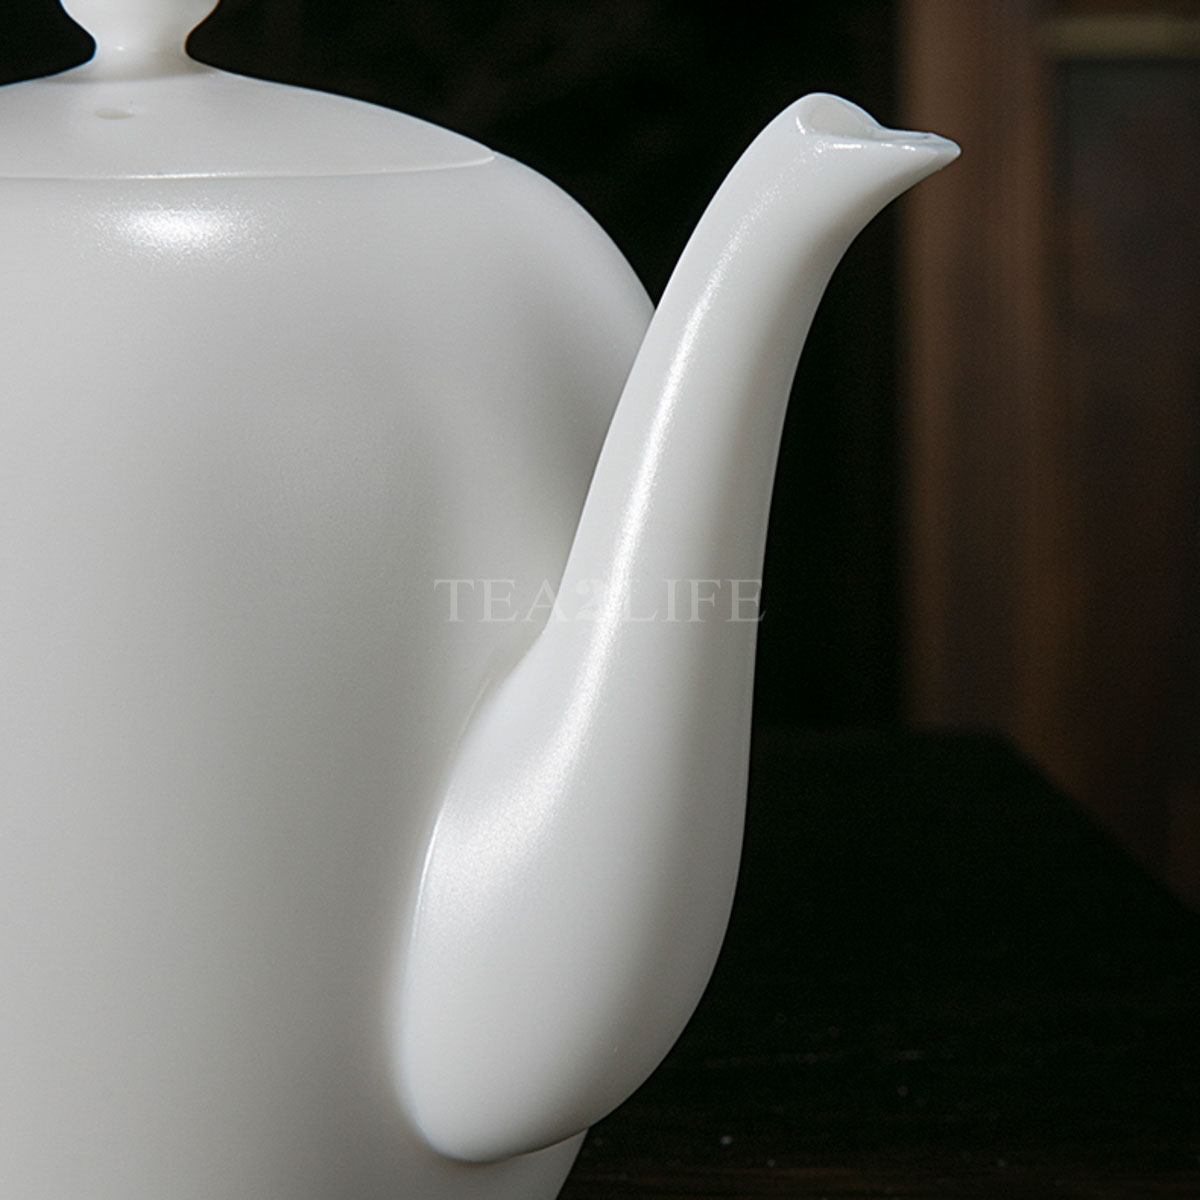 Cuisinart PTK-330W PerfecTemp Porcelain Enameled Teakettle, White - Bed  Bath & Beyond - 24103523